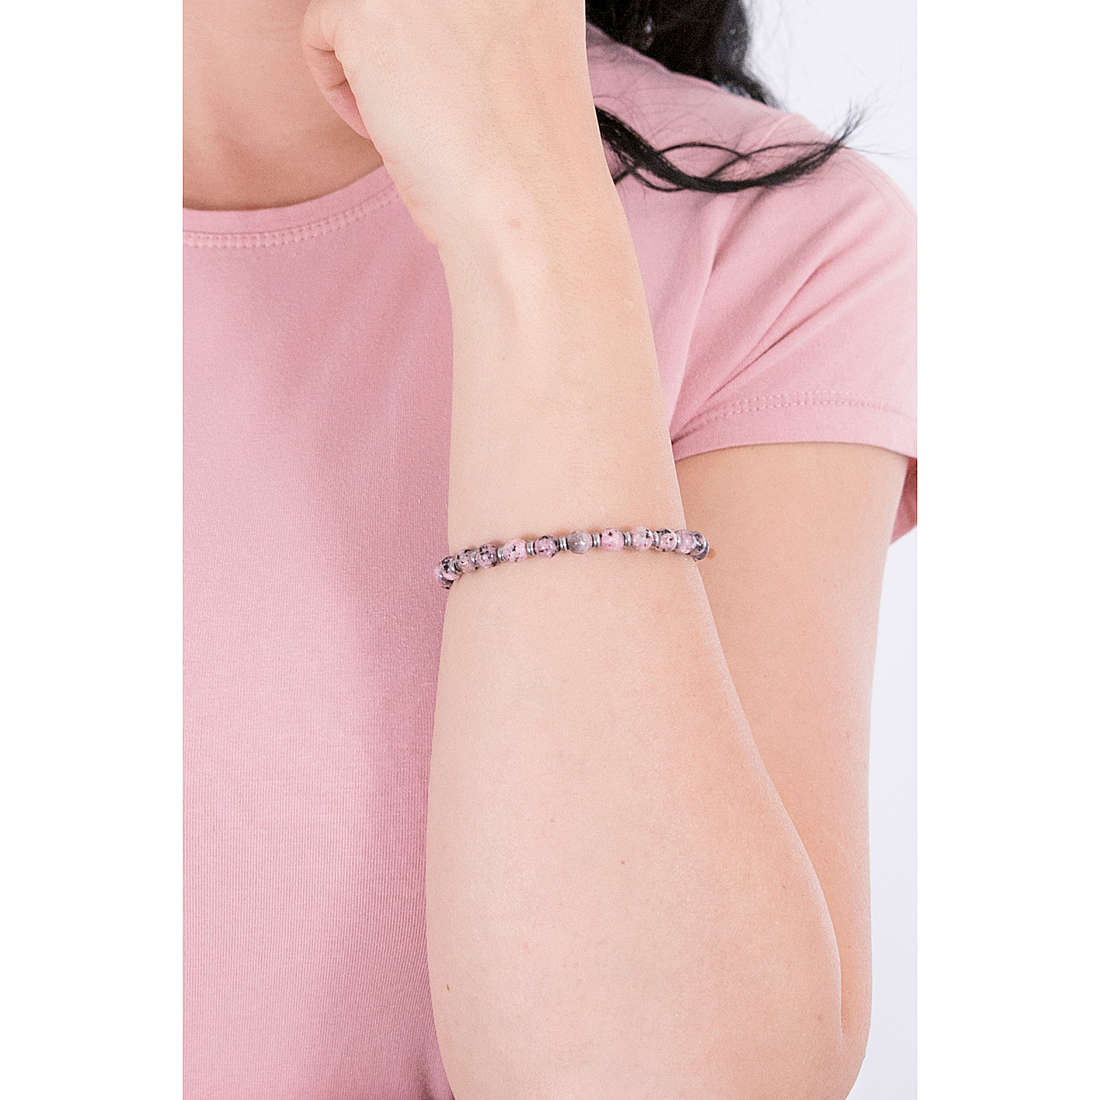 Kidult bracelets Symbols woman 731418 wearing